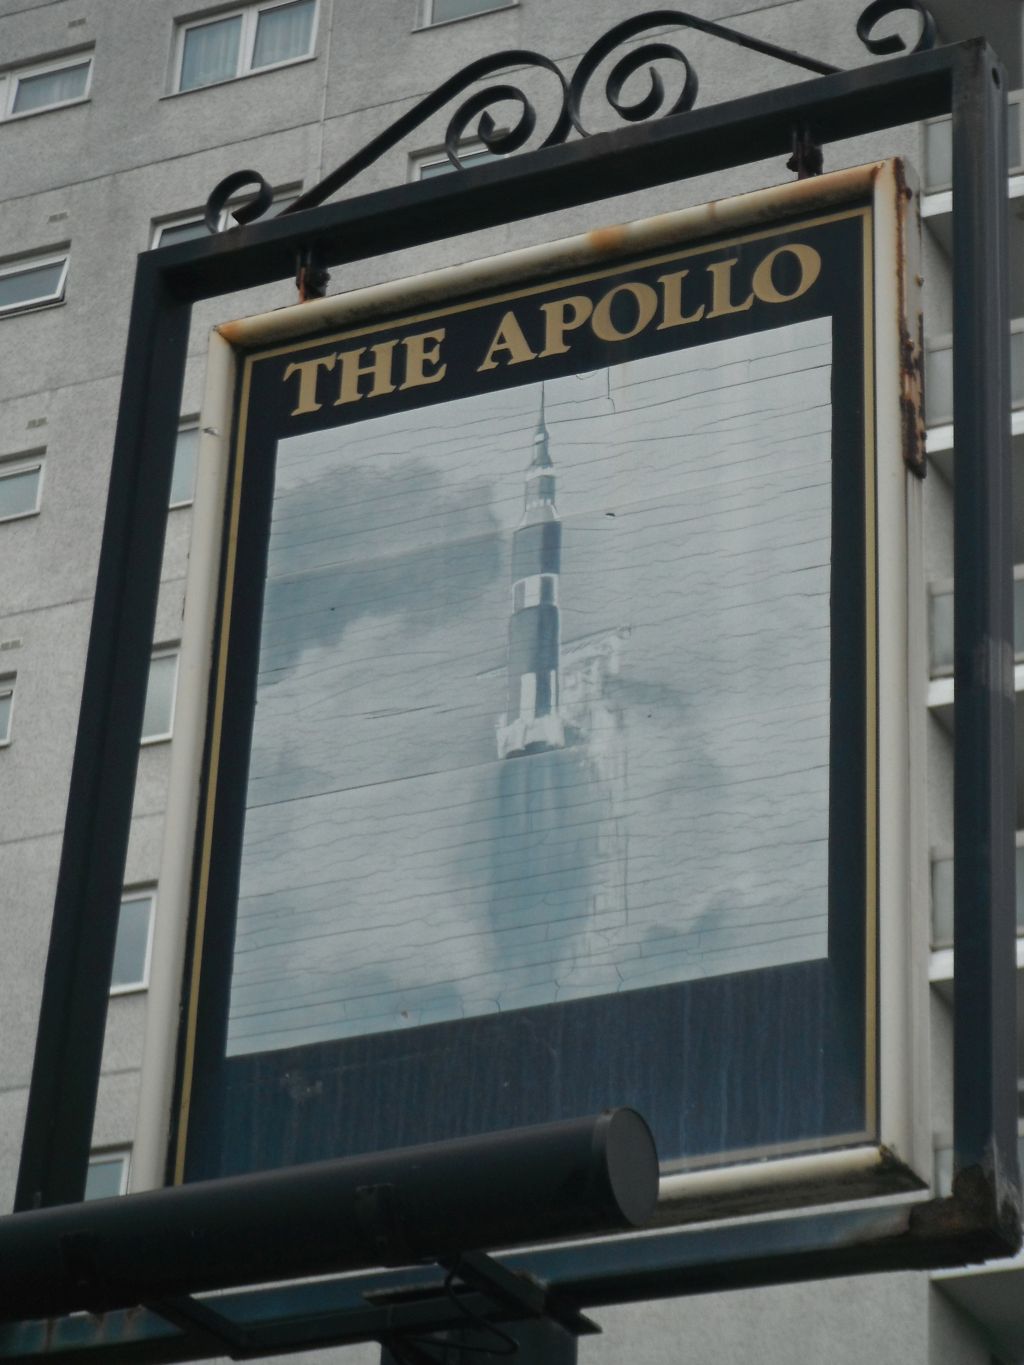 Photo taken by me – The Apollo pub sign, Miles Platting, Manchester